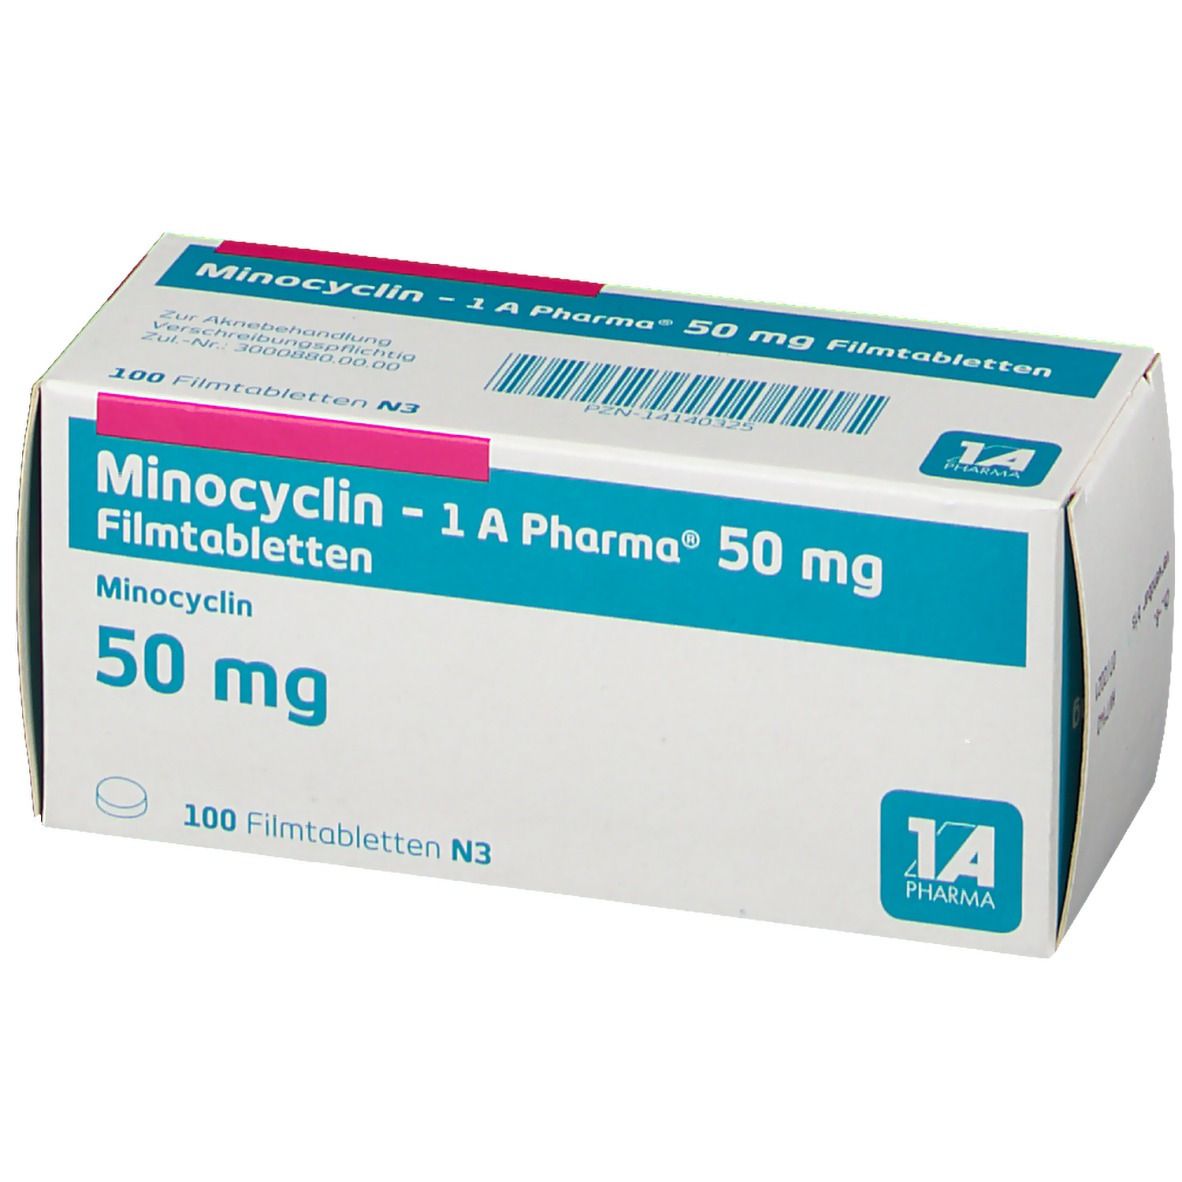 Minocyclin - 1 A Pharma® 50 mg